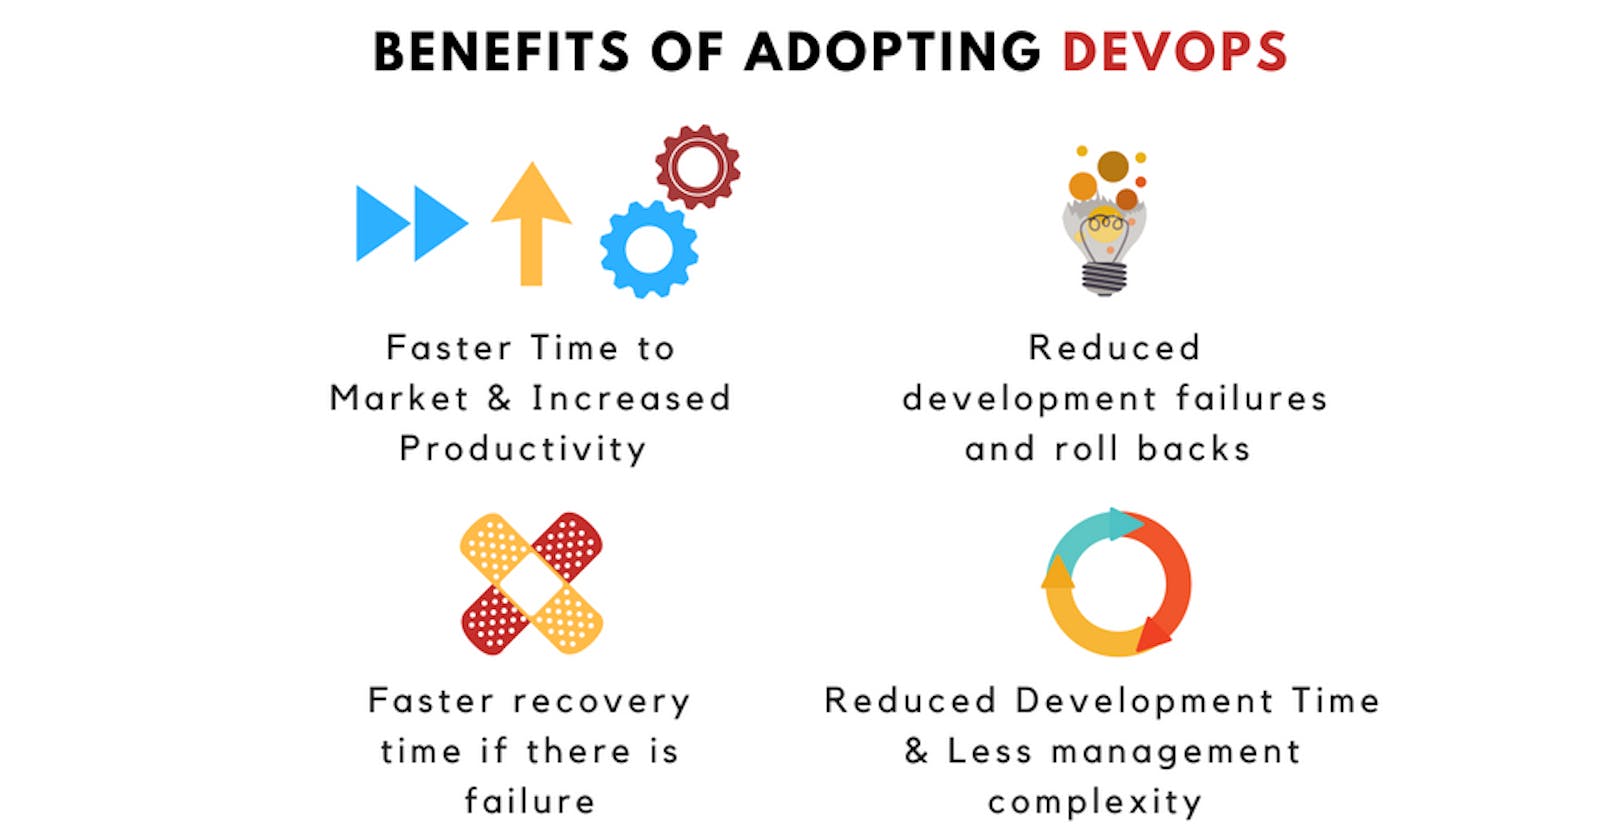 Key benefits of adopting DevOps: